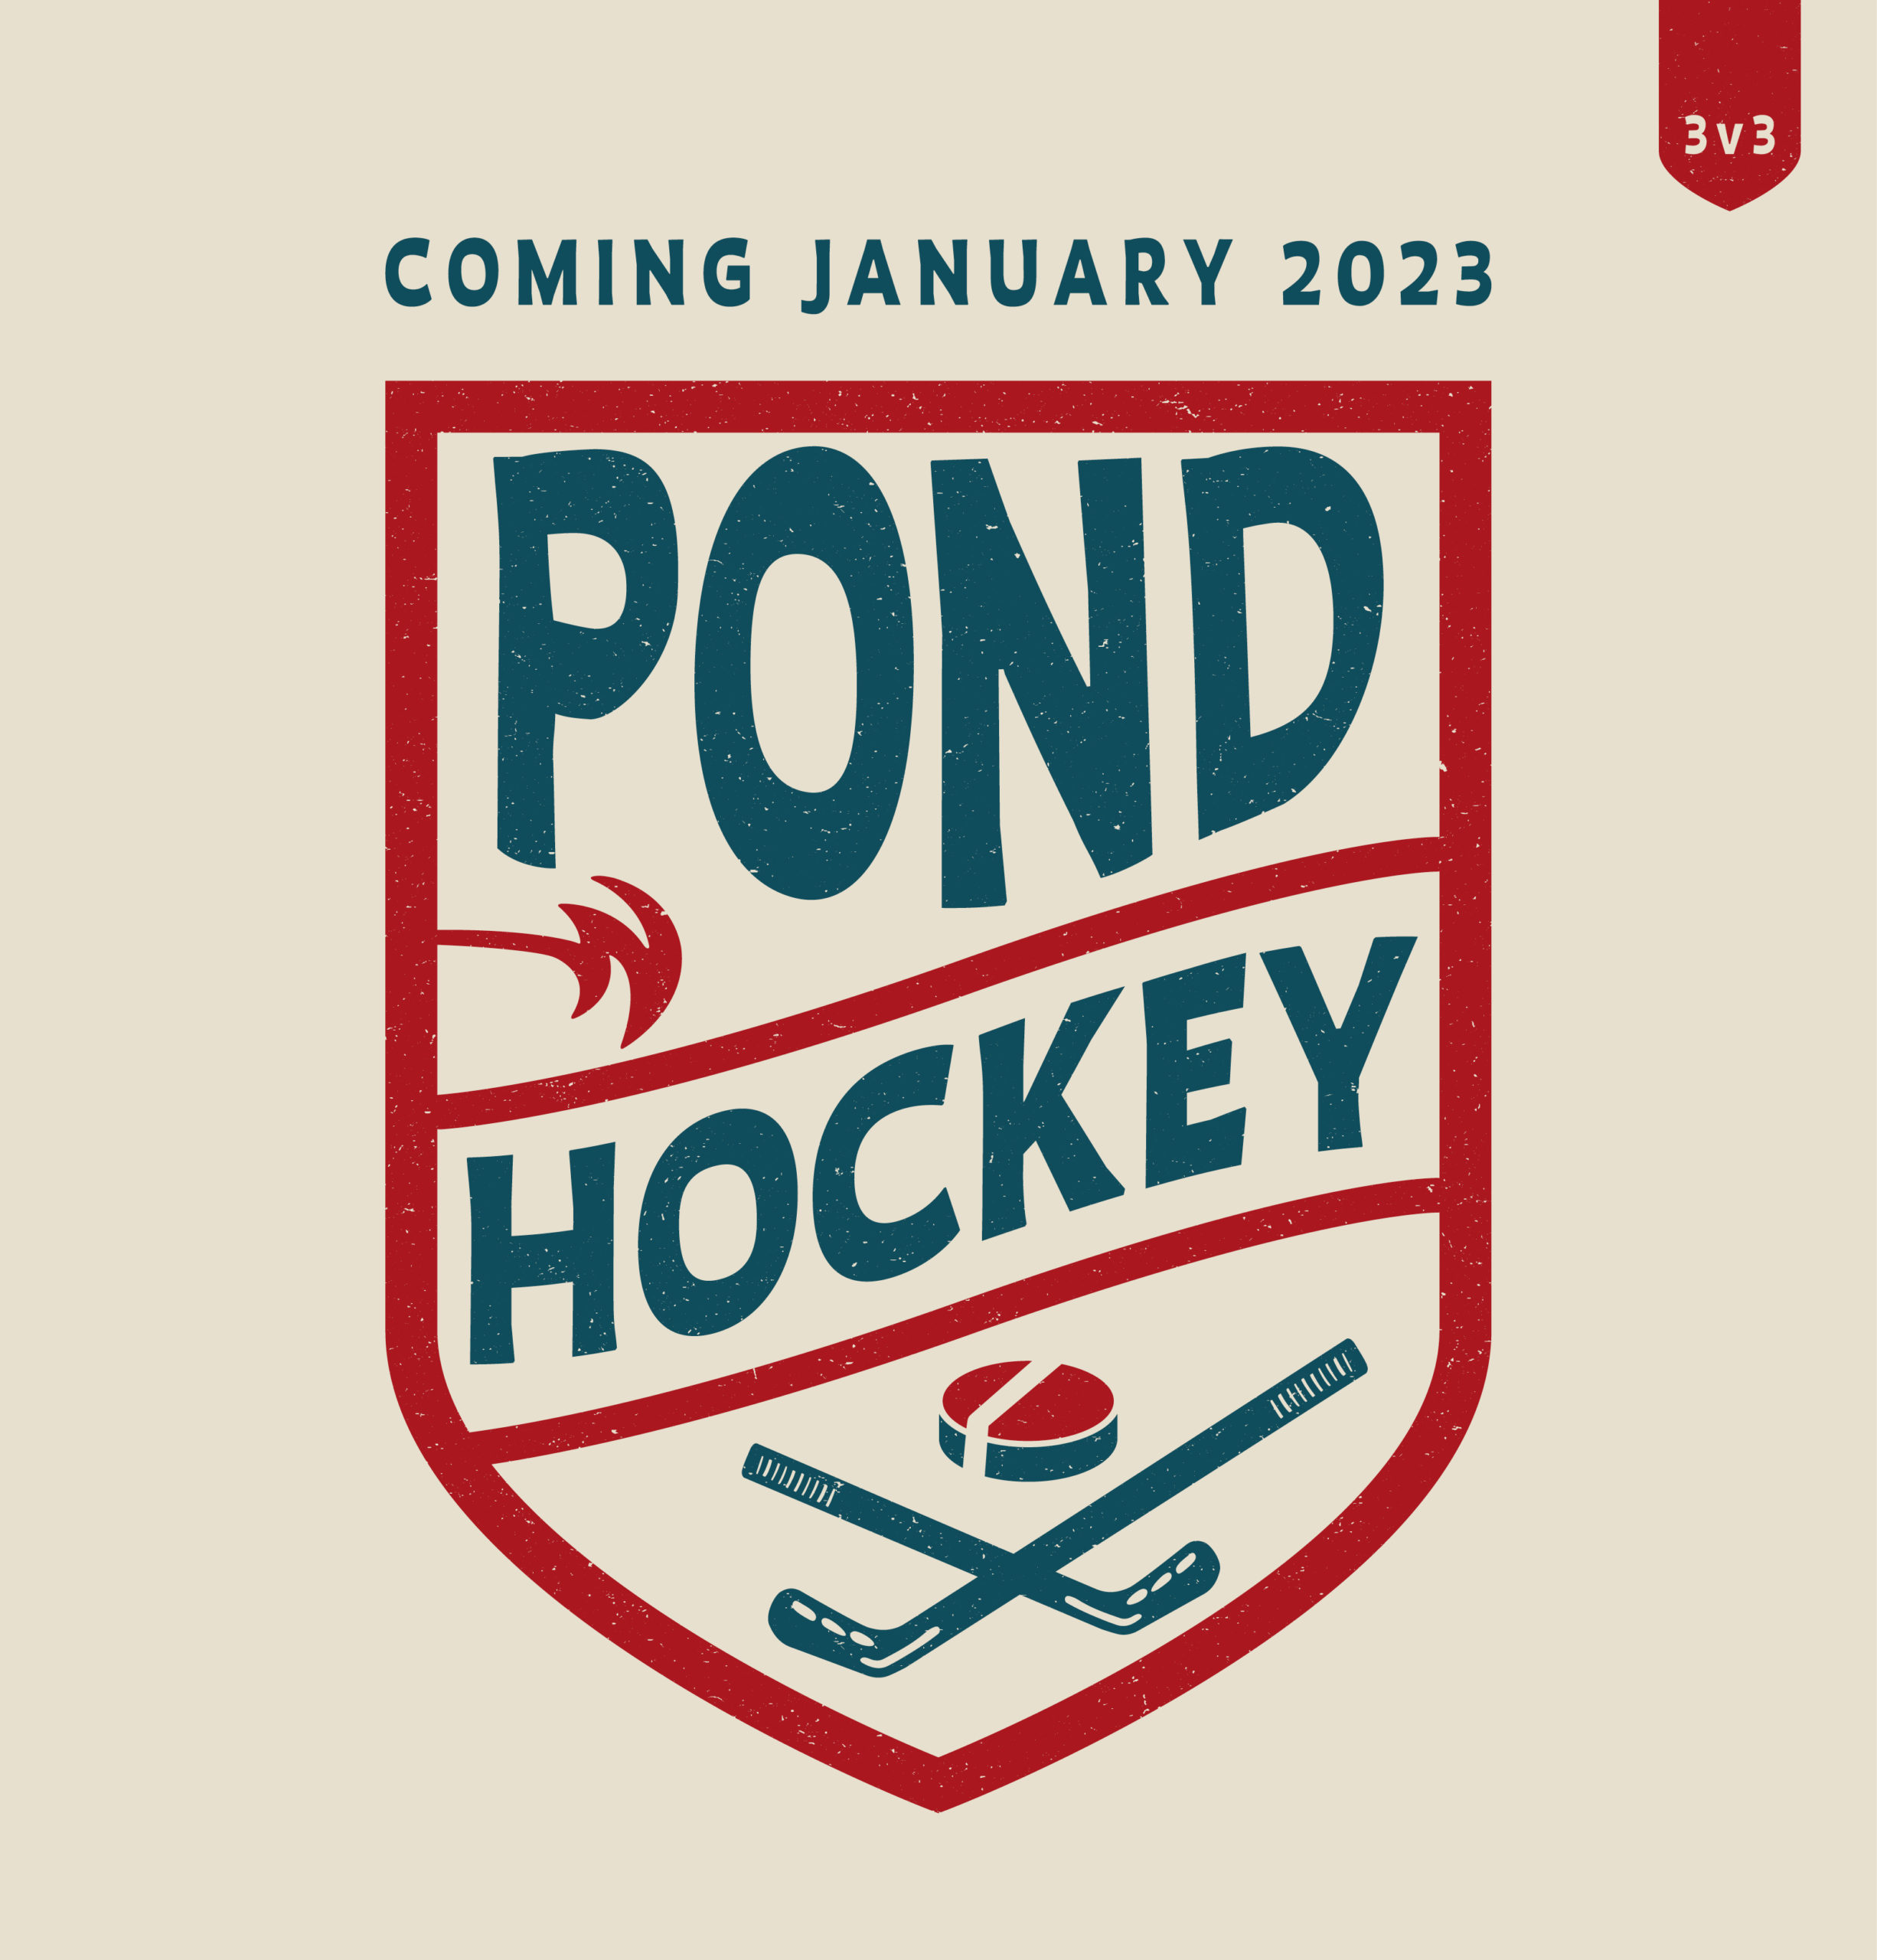 https://whitewater.org/wp-content/uploads/2022/10/Hockey-League-Web3-scaled.jpg